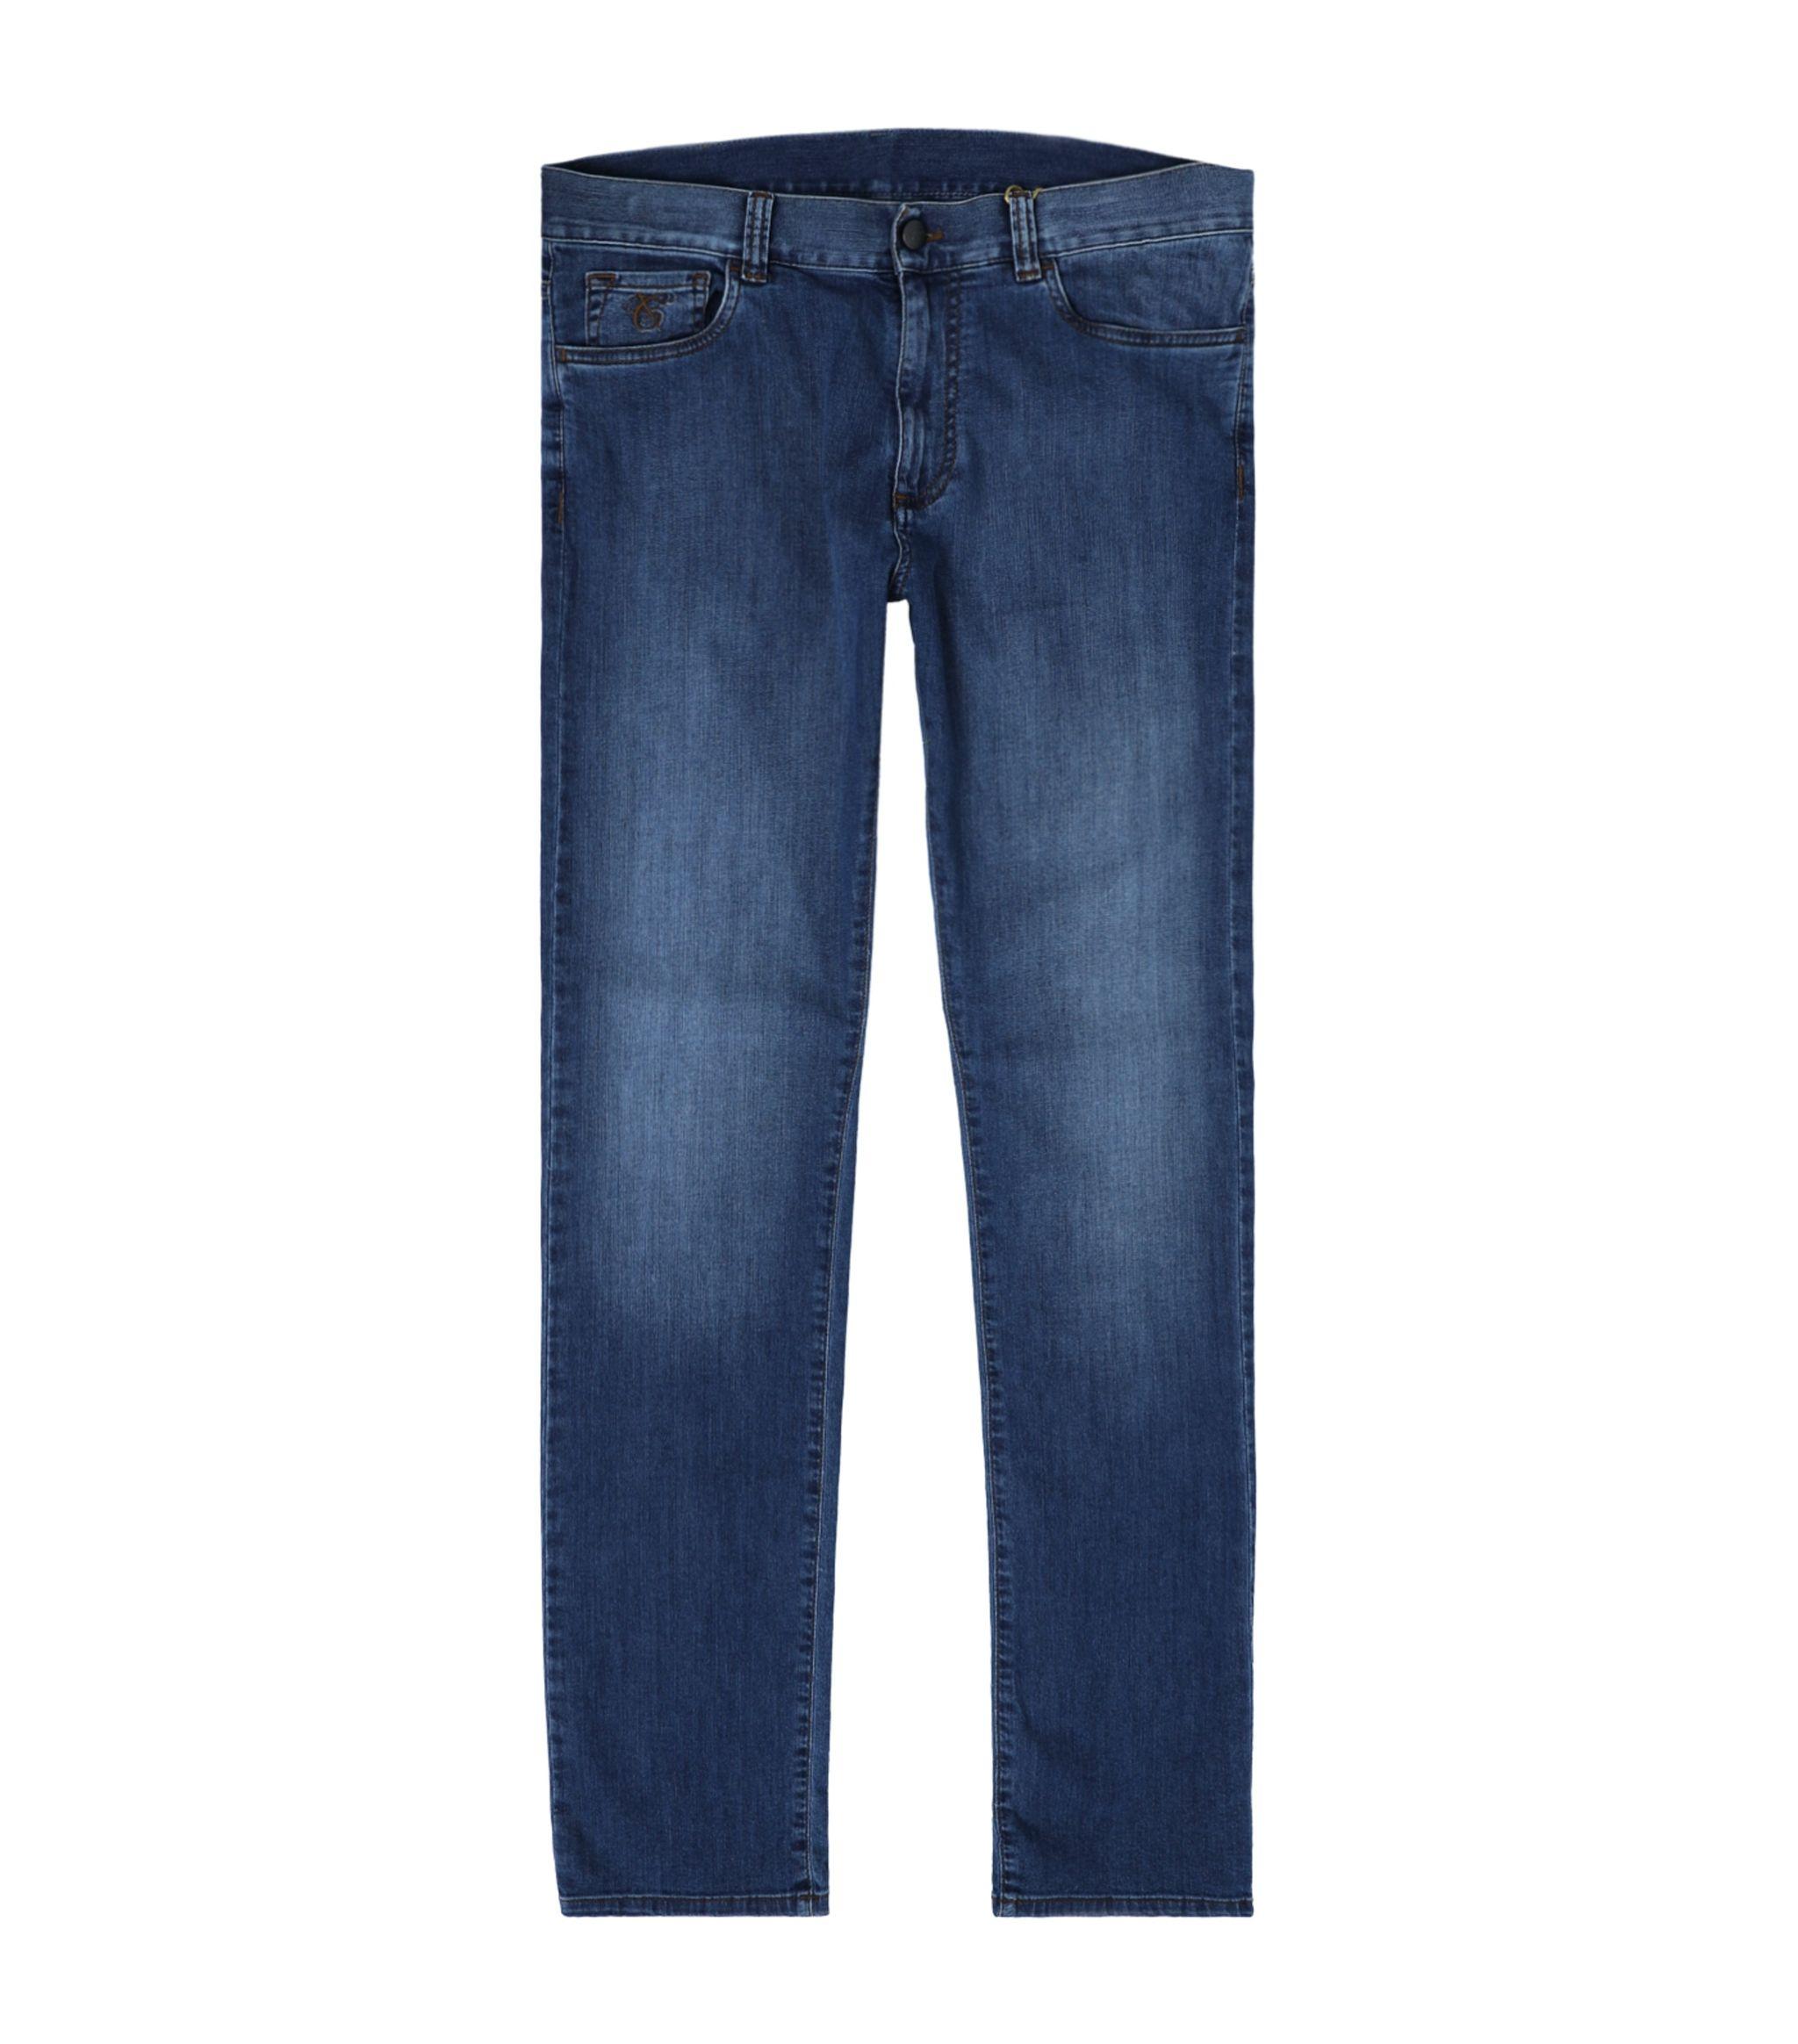 Canali Denim Regular-fit Stretch Jeans in Blue for Men - Lyst